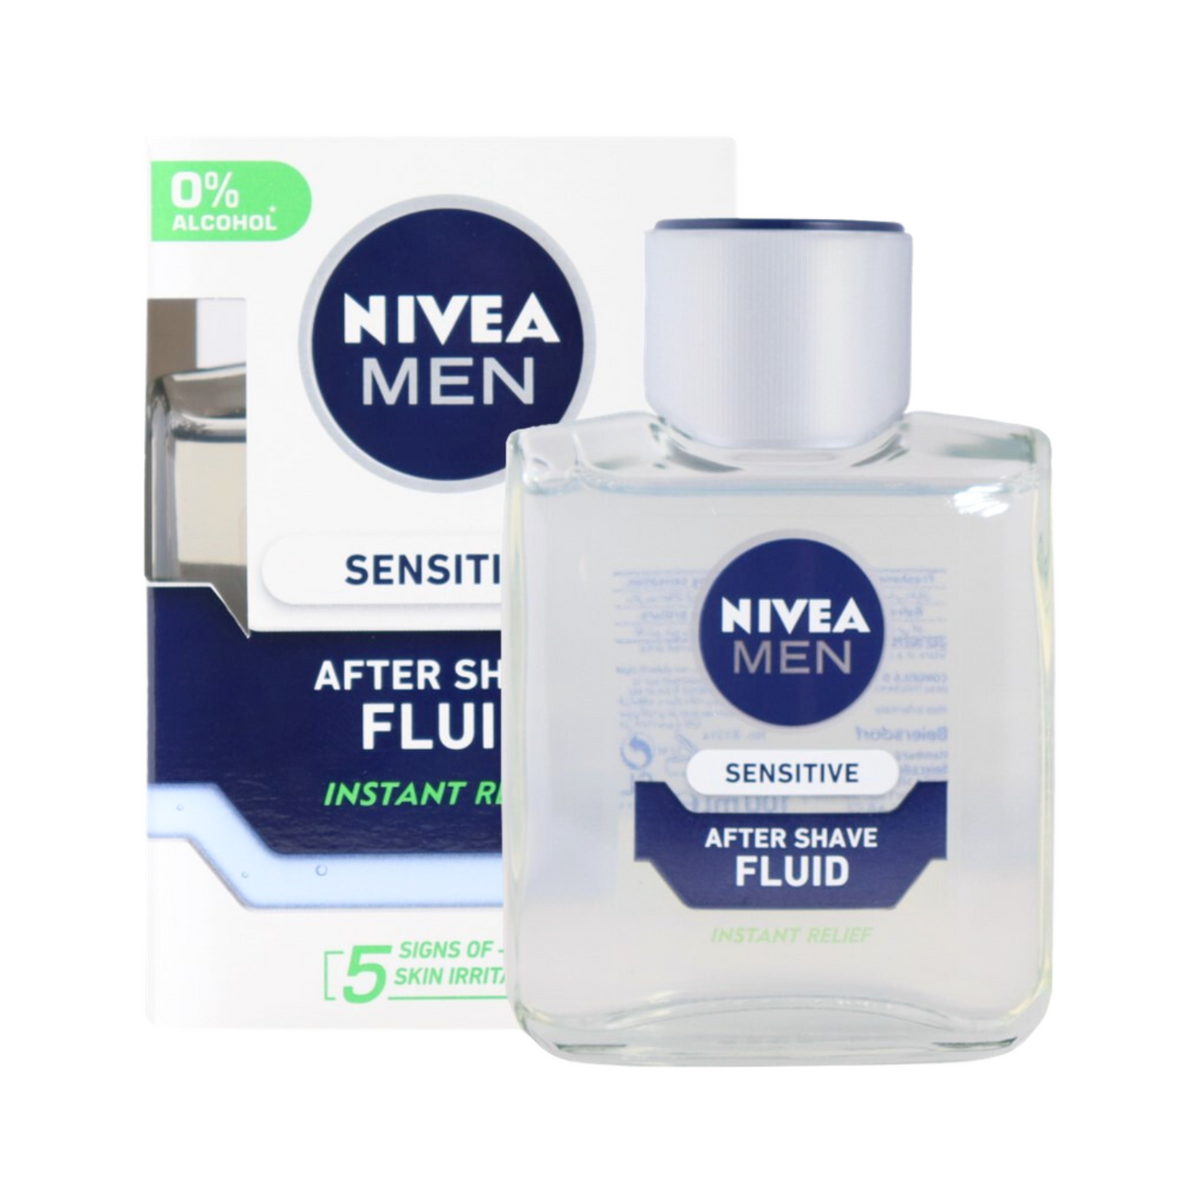 nivea-men-sensitive-after-shave-fluid-100ml